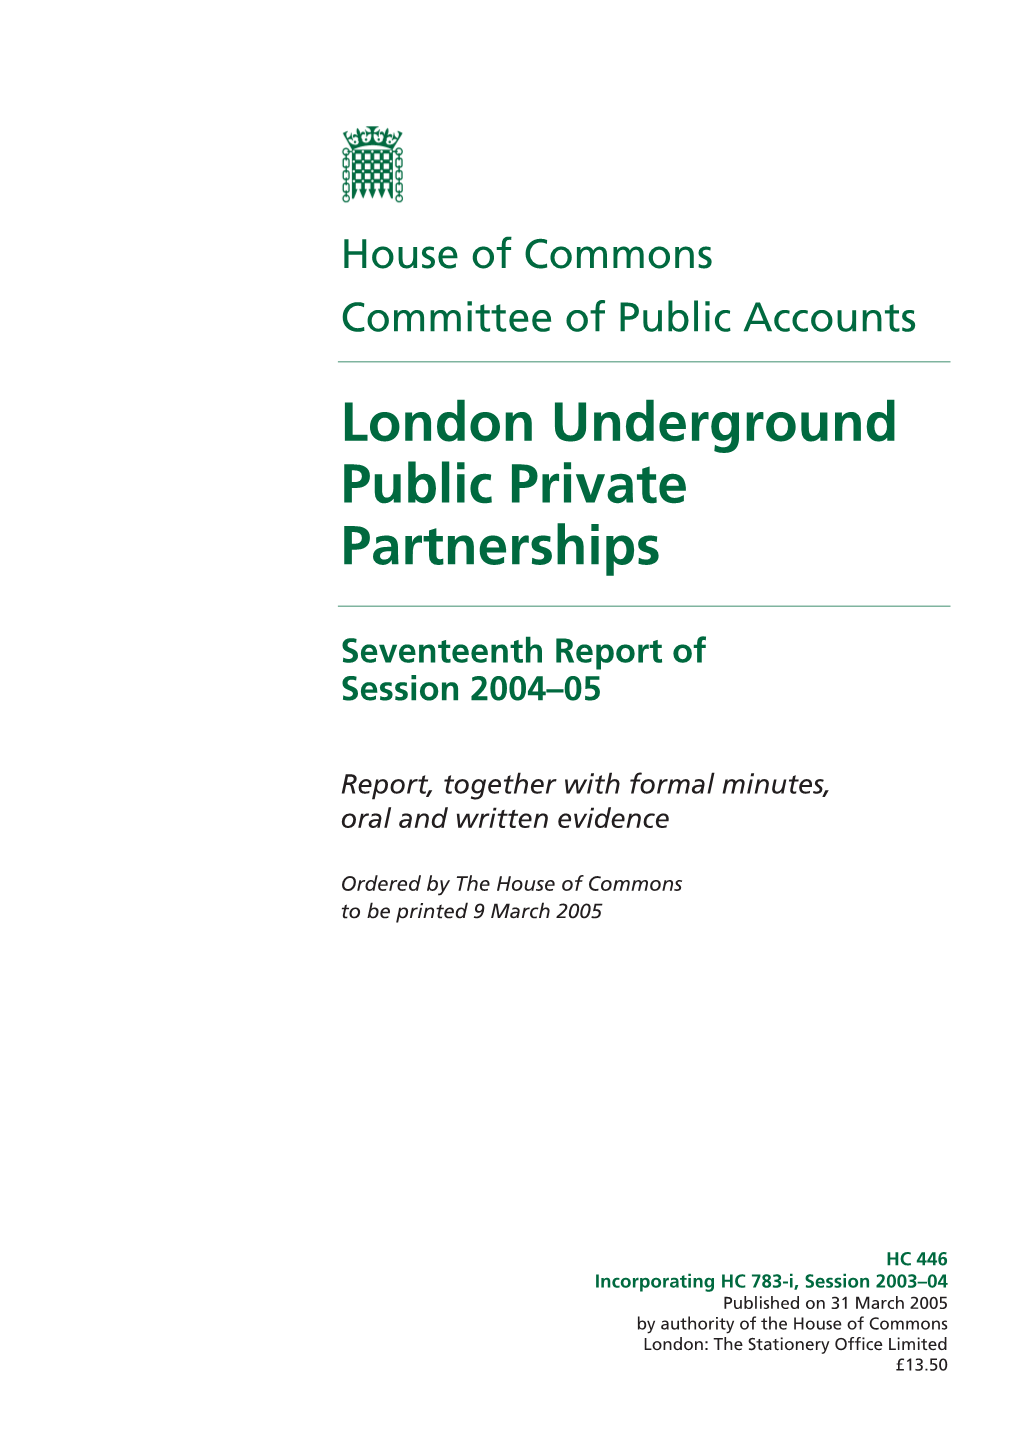 London Underground Public Private Partnerships